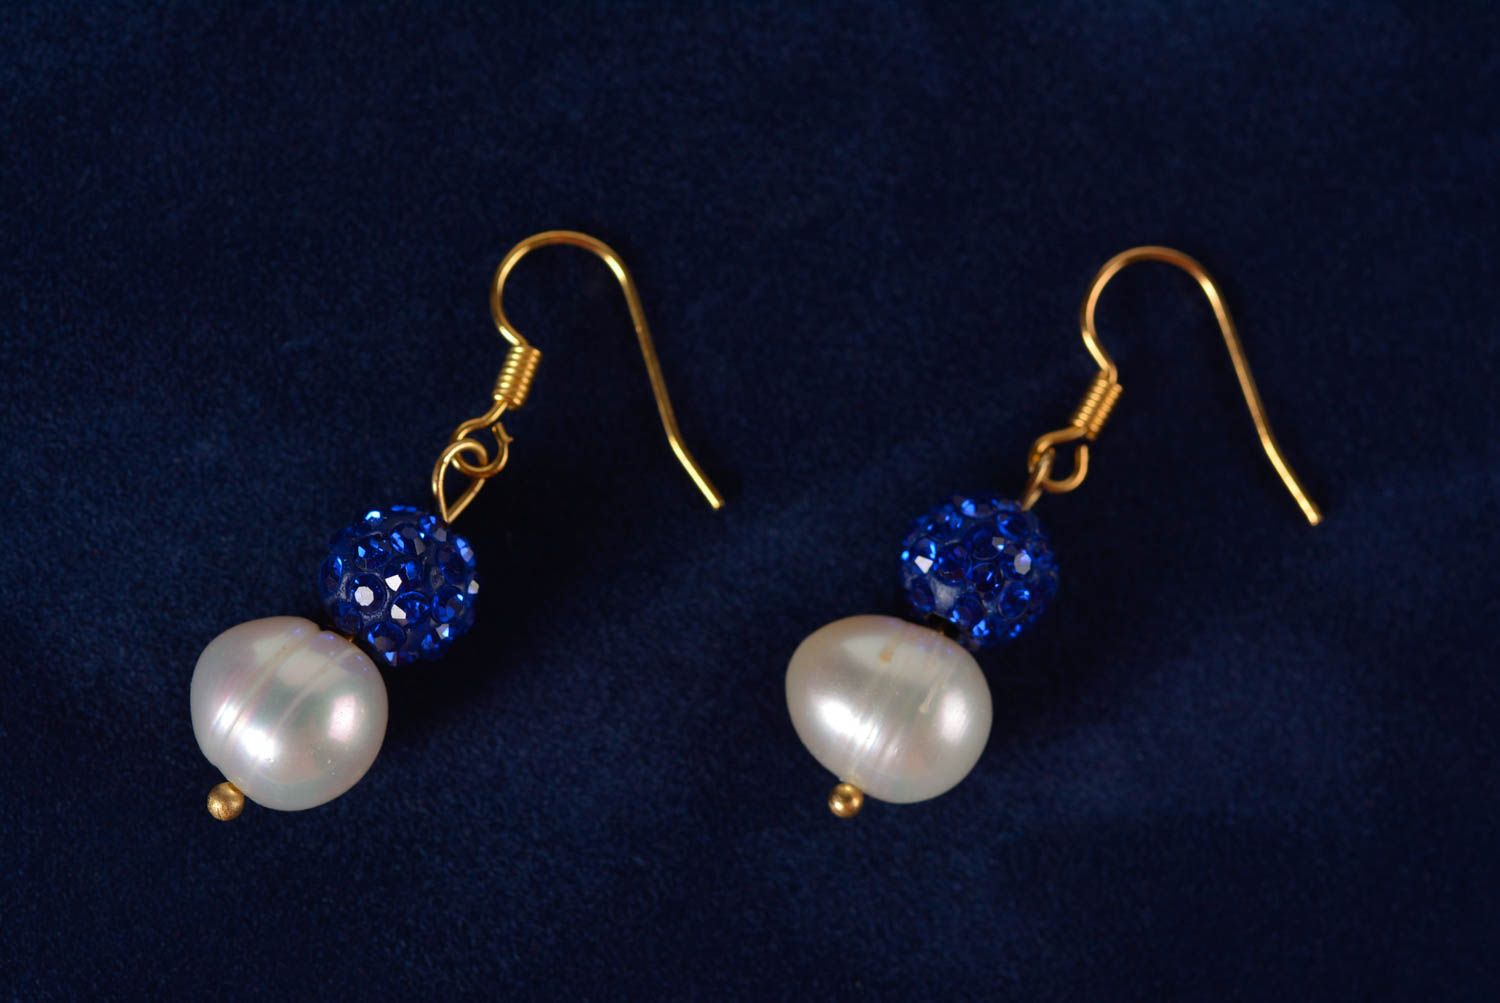 Dangling earrings pearl earrings handmade jewellery women accessories cool gifts photo 1